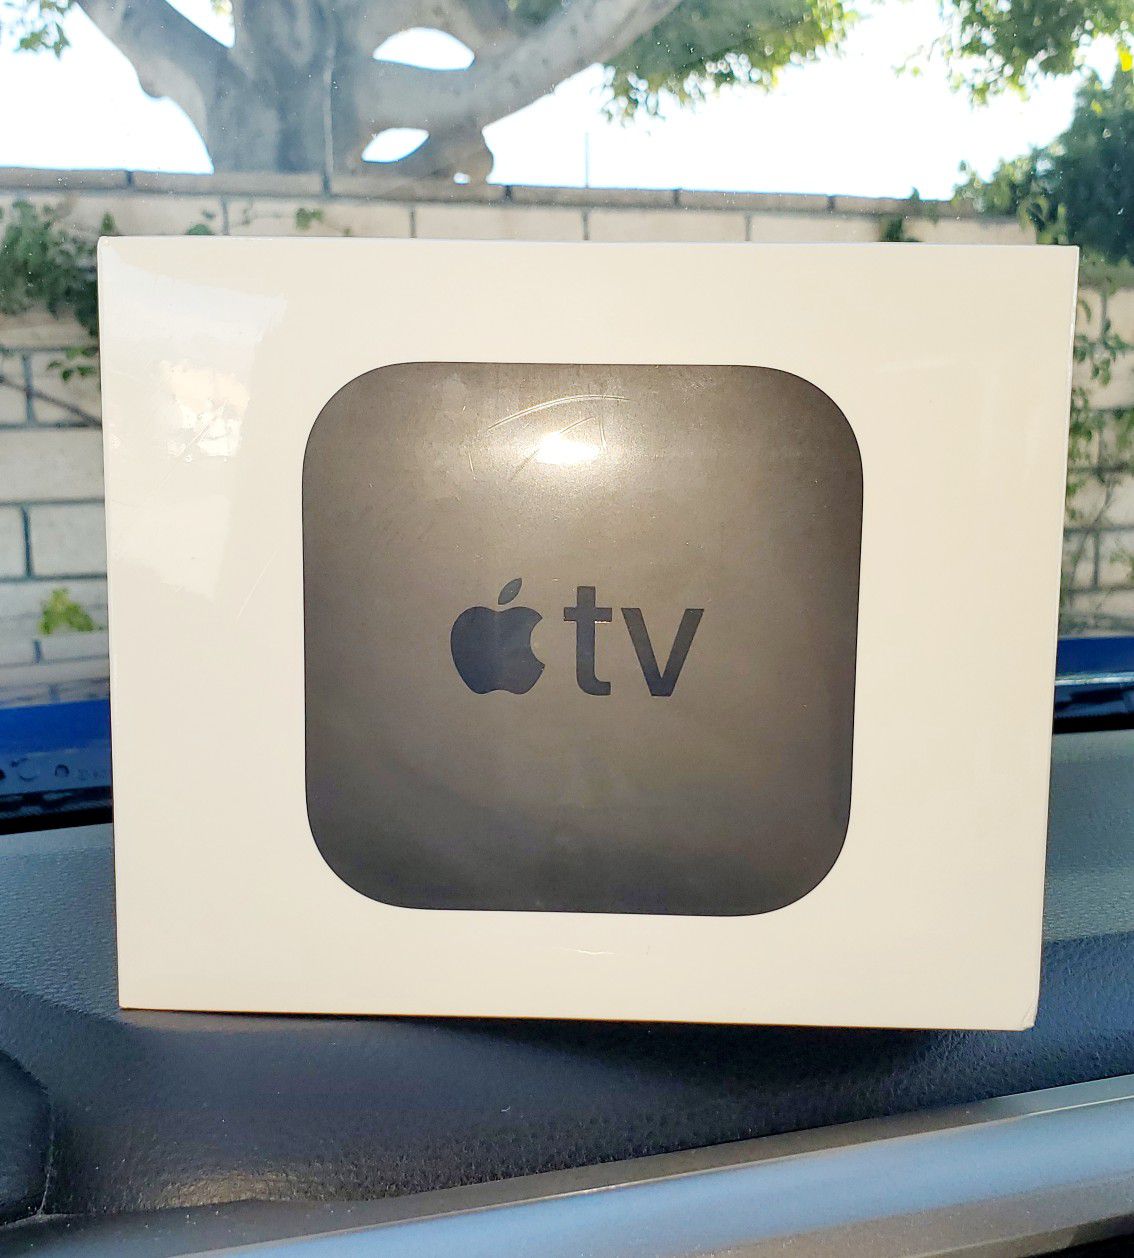 Apple TV 4th Generation